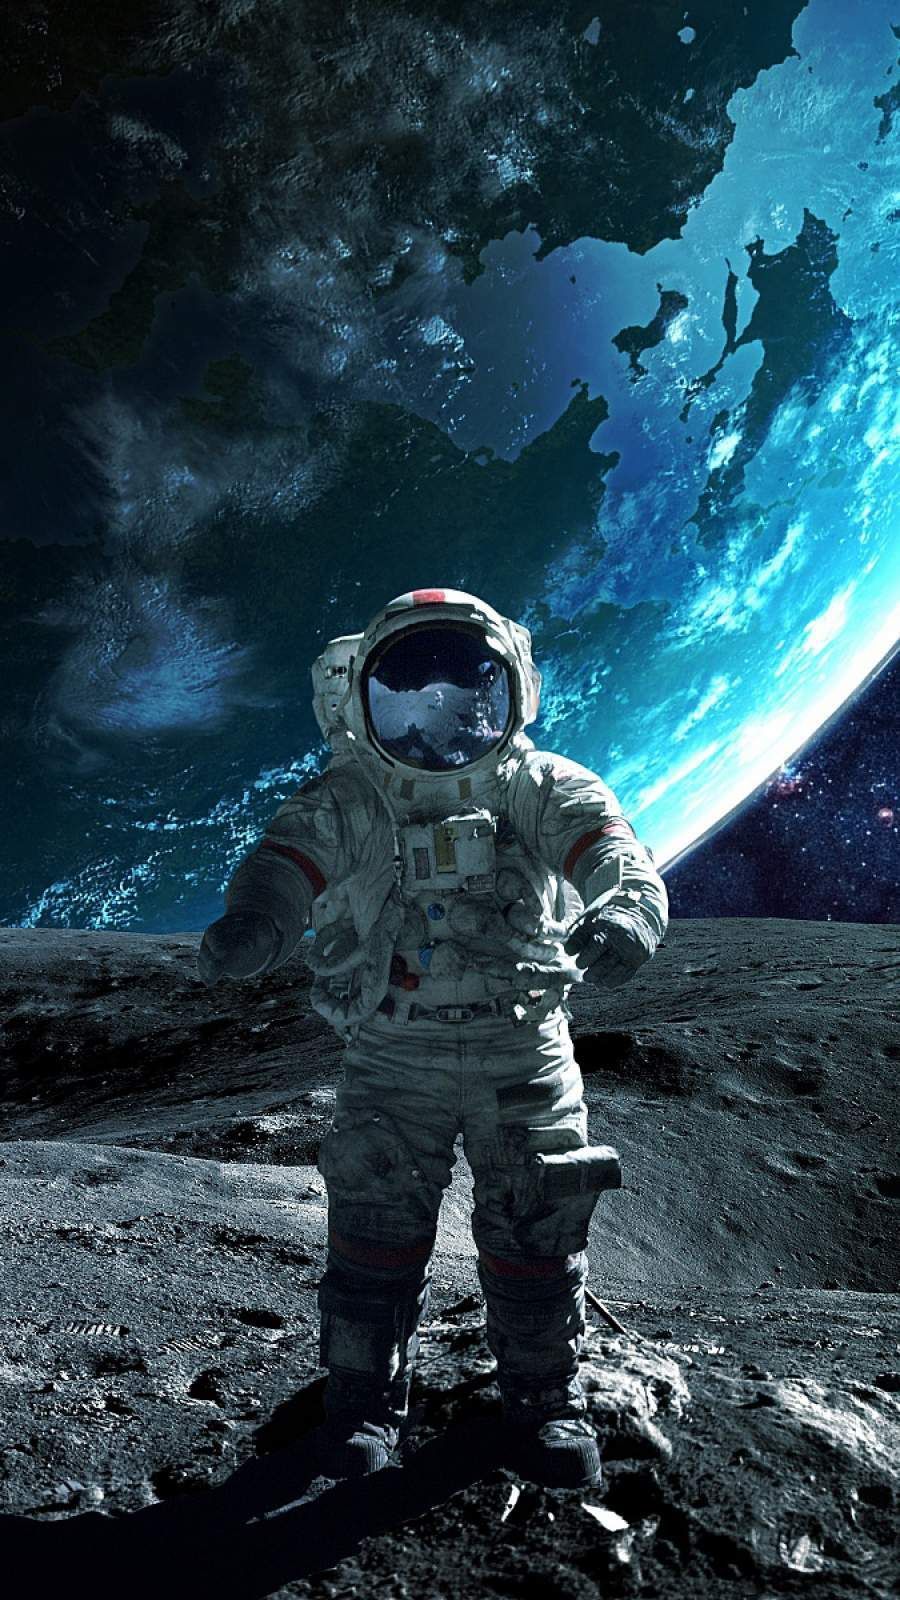 Moon Astronaut iPhone Wallpaper. Astronaut wallpaper, Space artwork, Nasa wallpaper